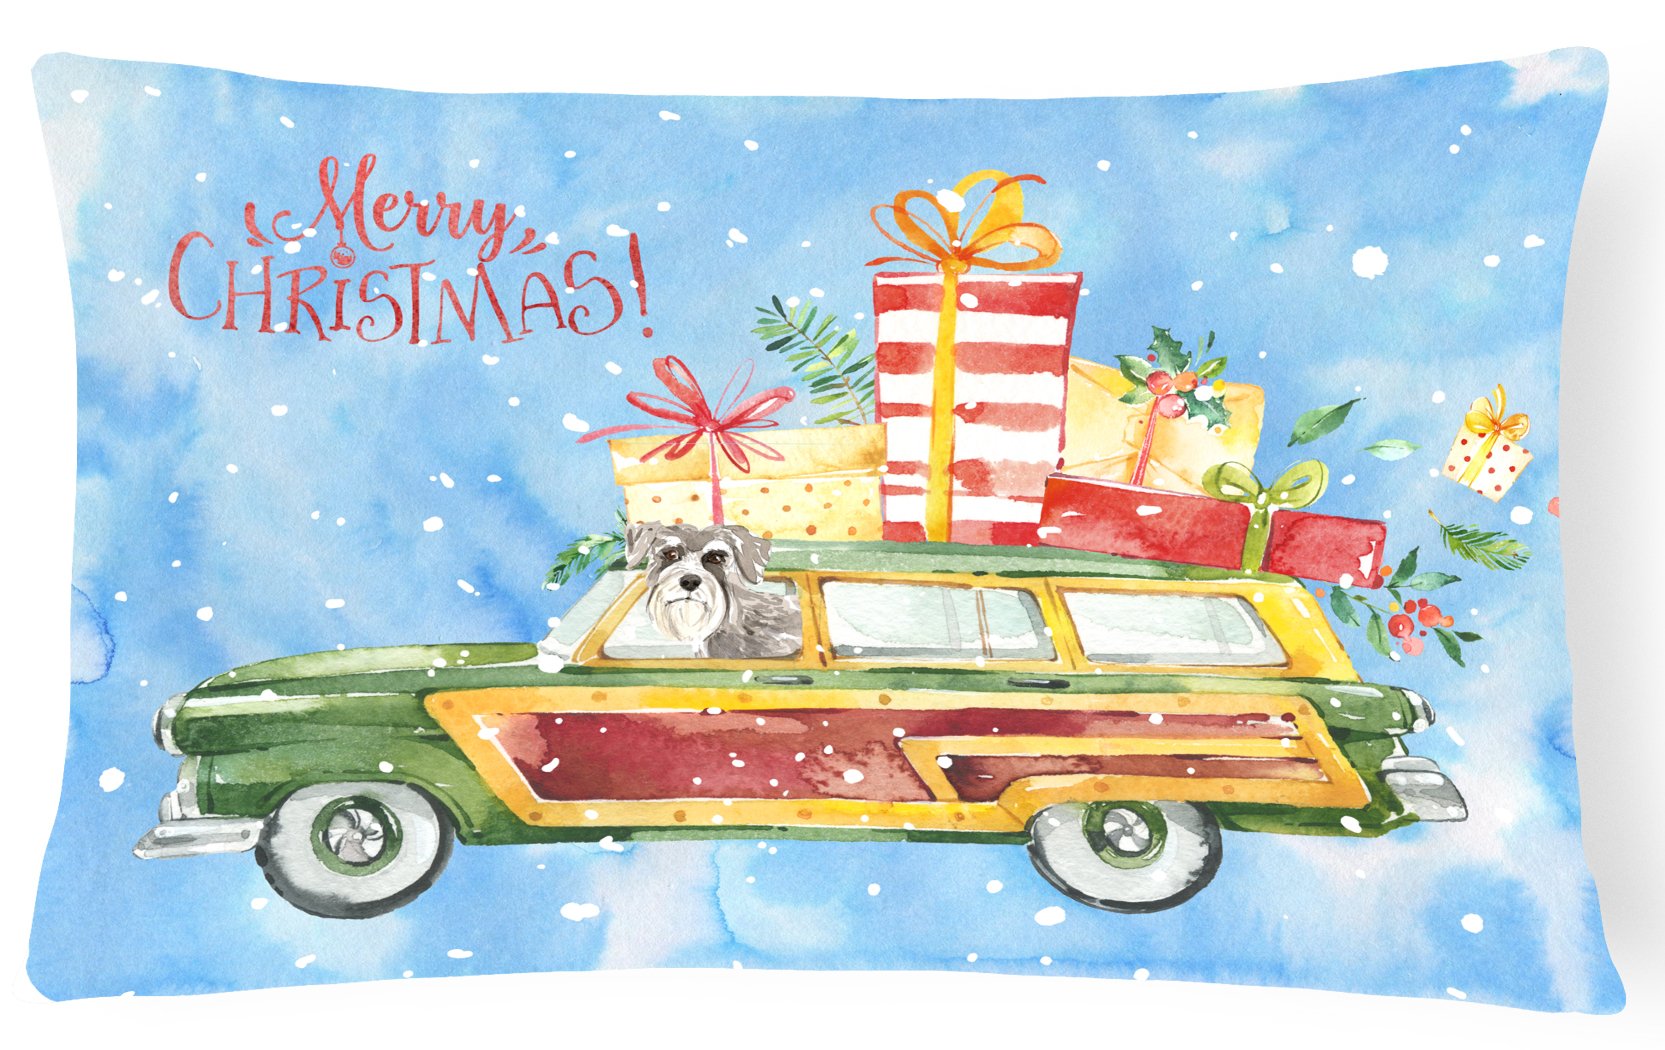 Merry Christmas Schnauzer #2 Canvas Fabric Decorative Pillow CK2419PW1216 by Caroline's Treasures